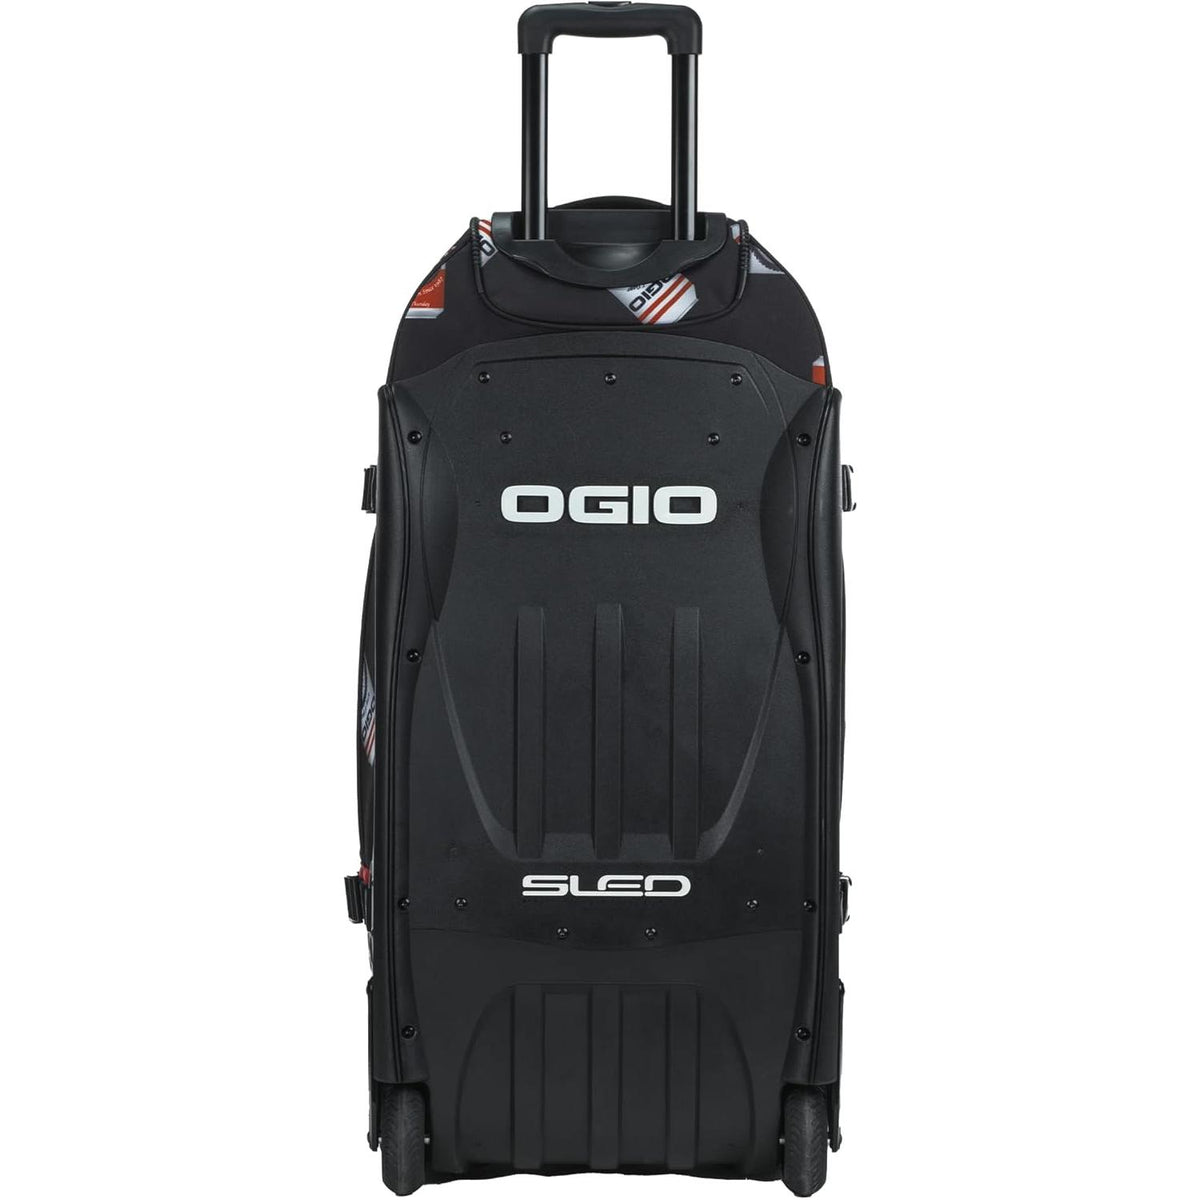 Ogio Rig 9800 Pro Bag